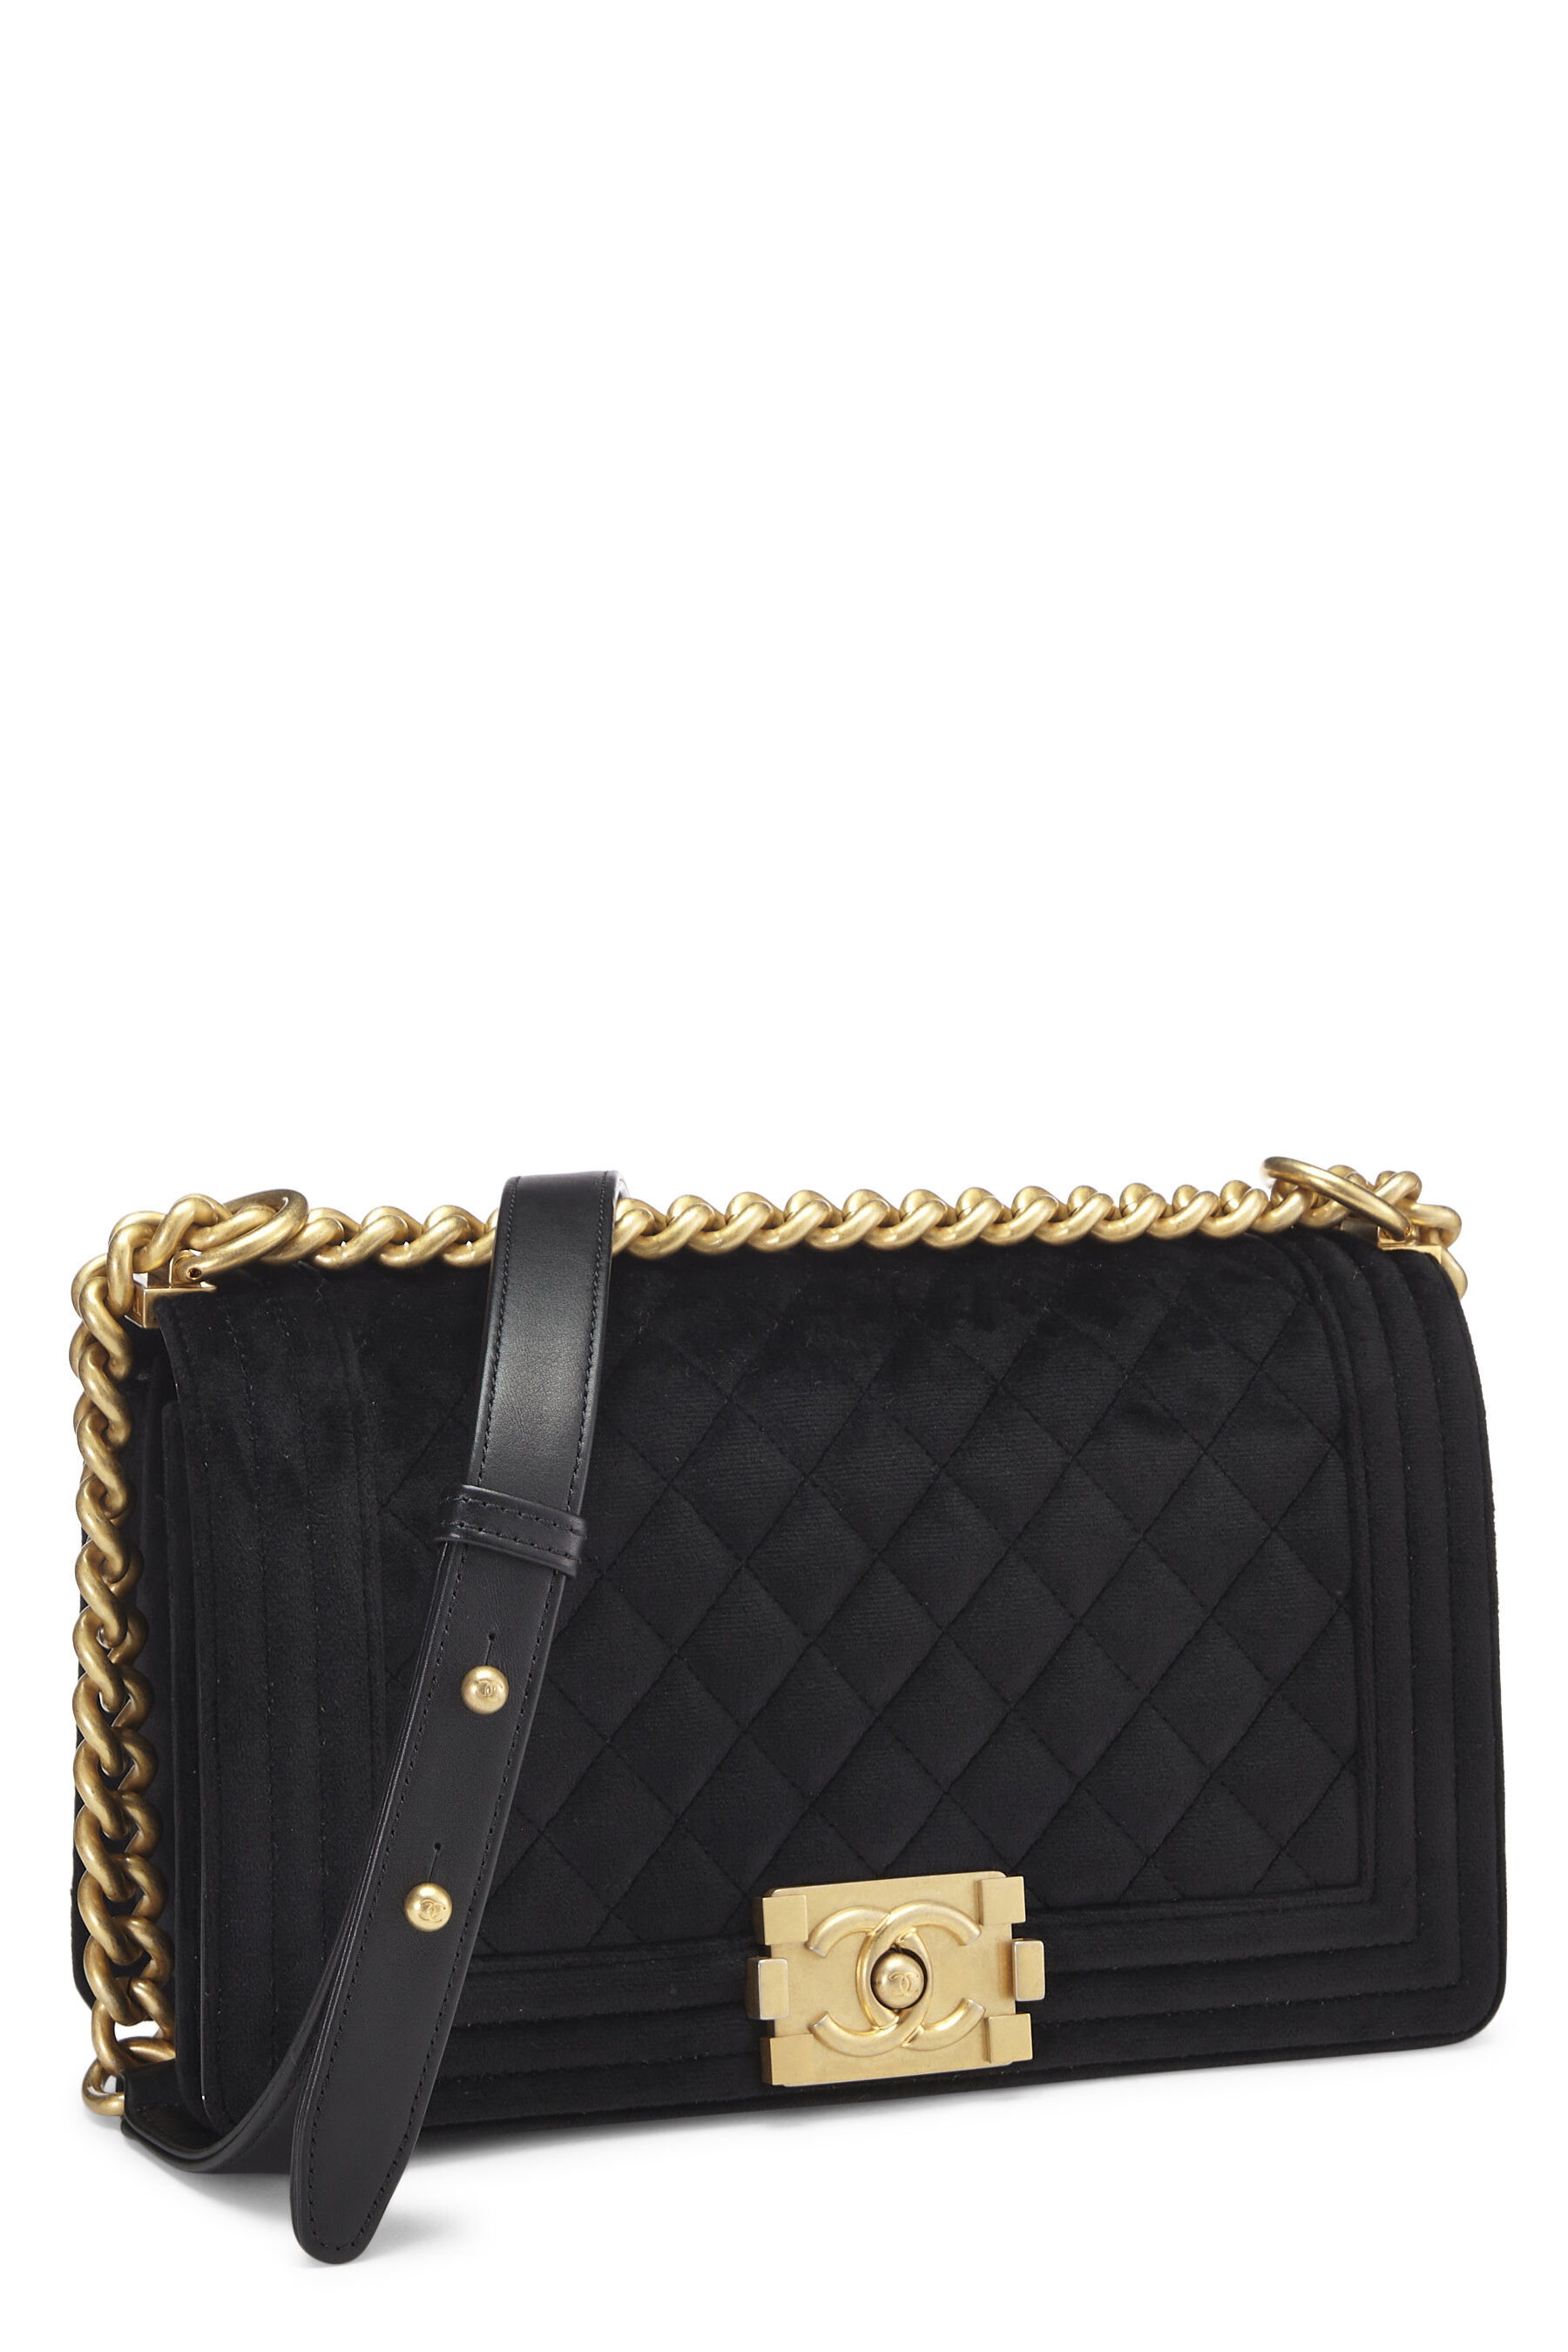 Black Chanel Medium Boy Bag  Designer Revival